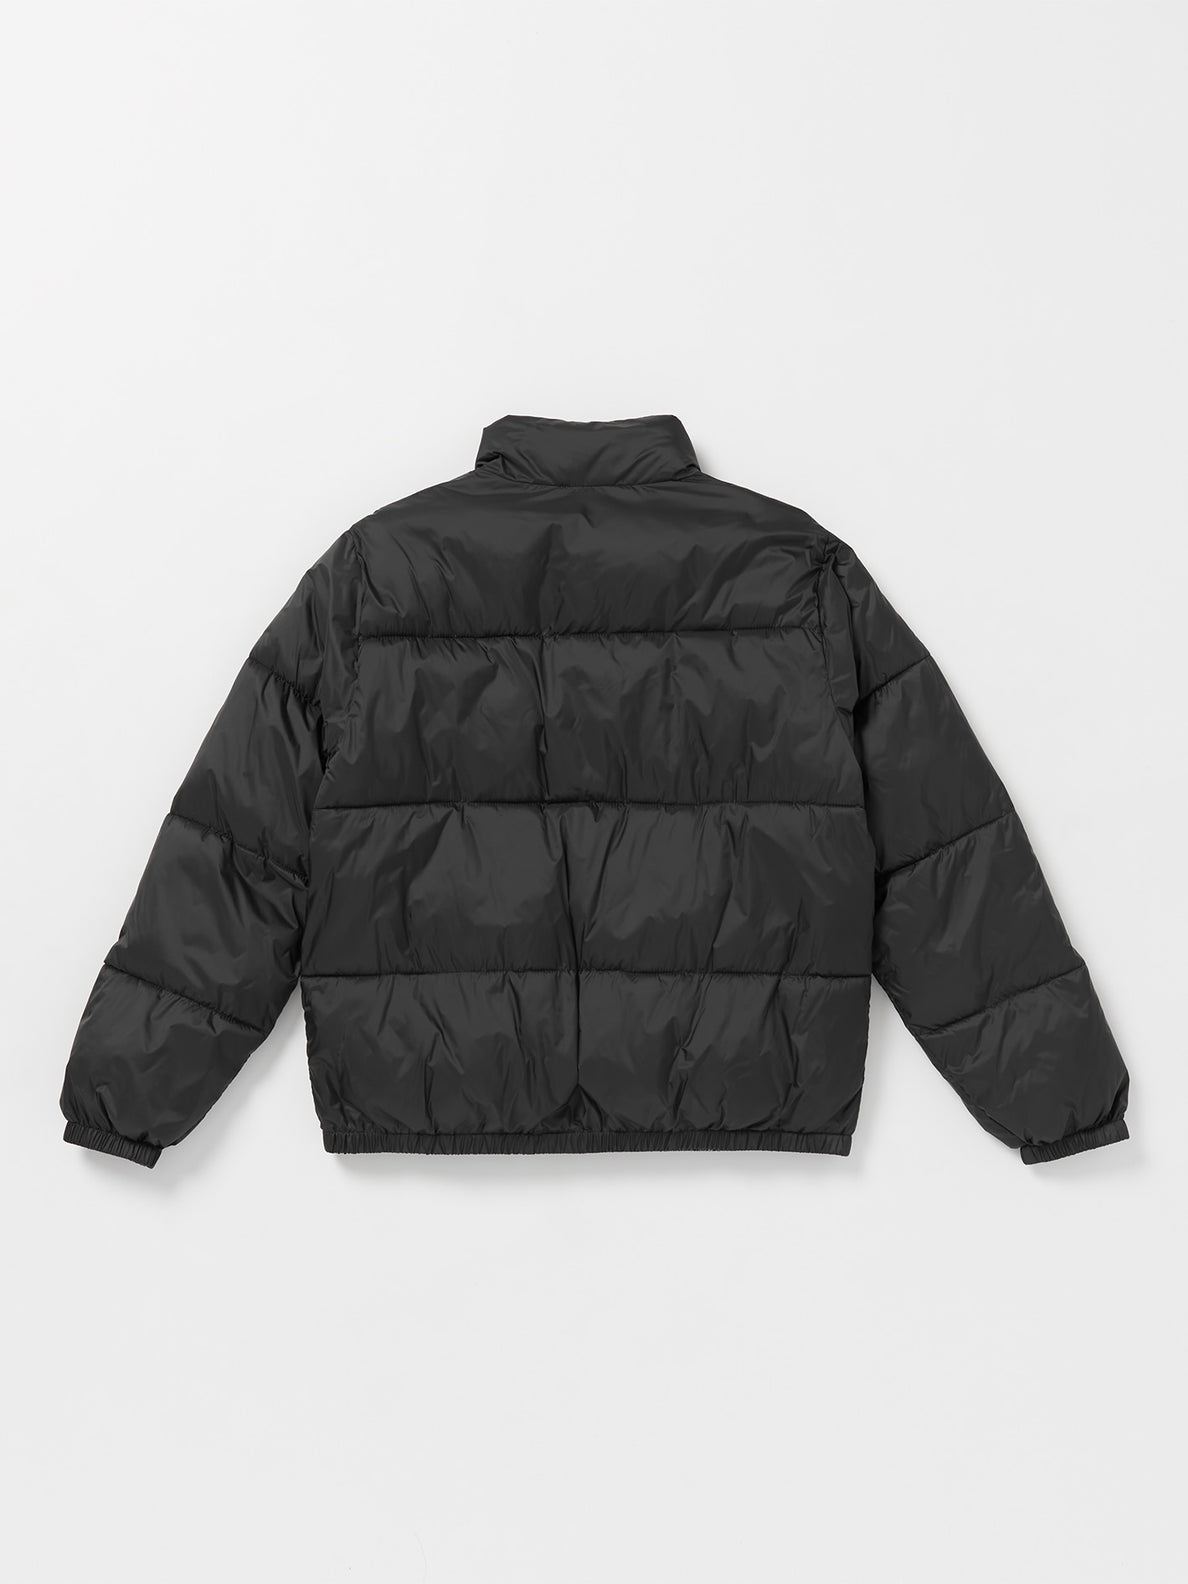 Walltz Reversible Jacket - Black White